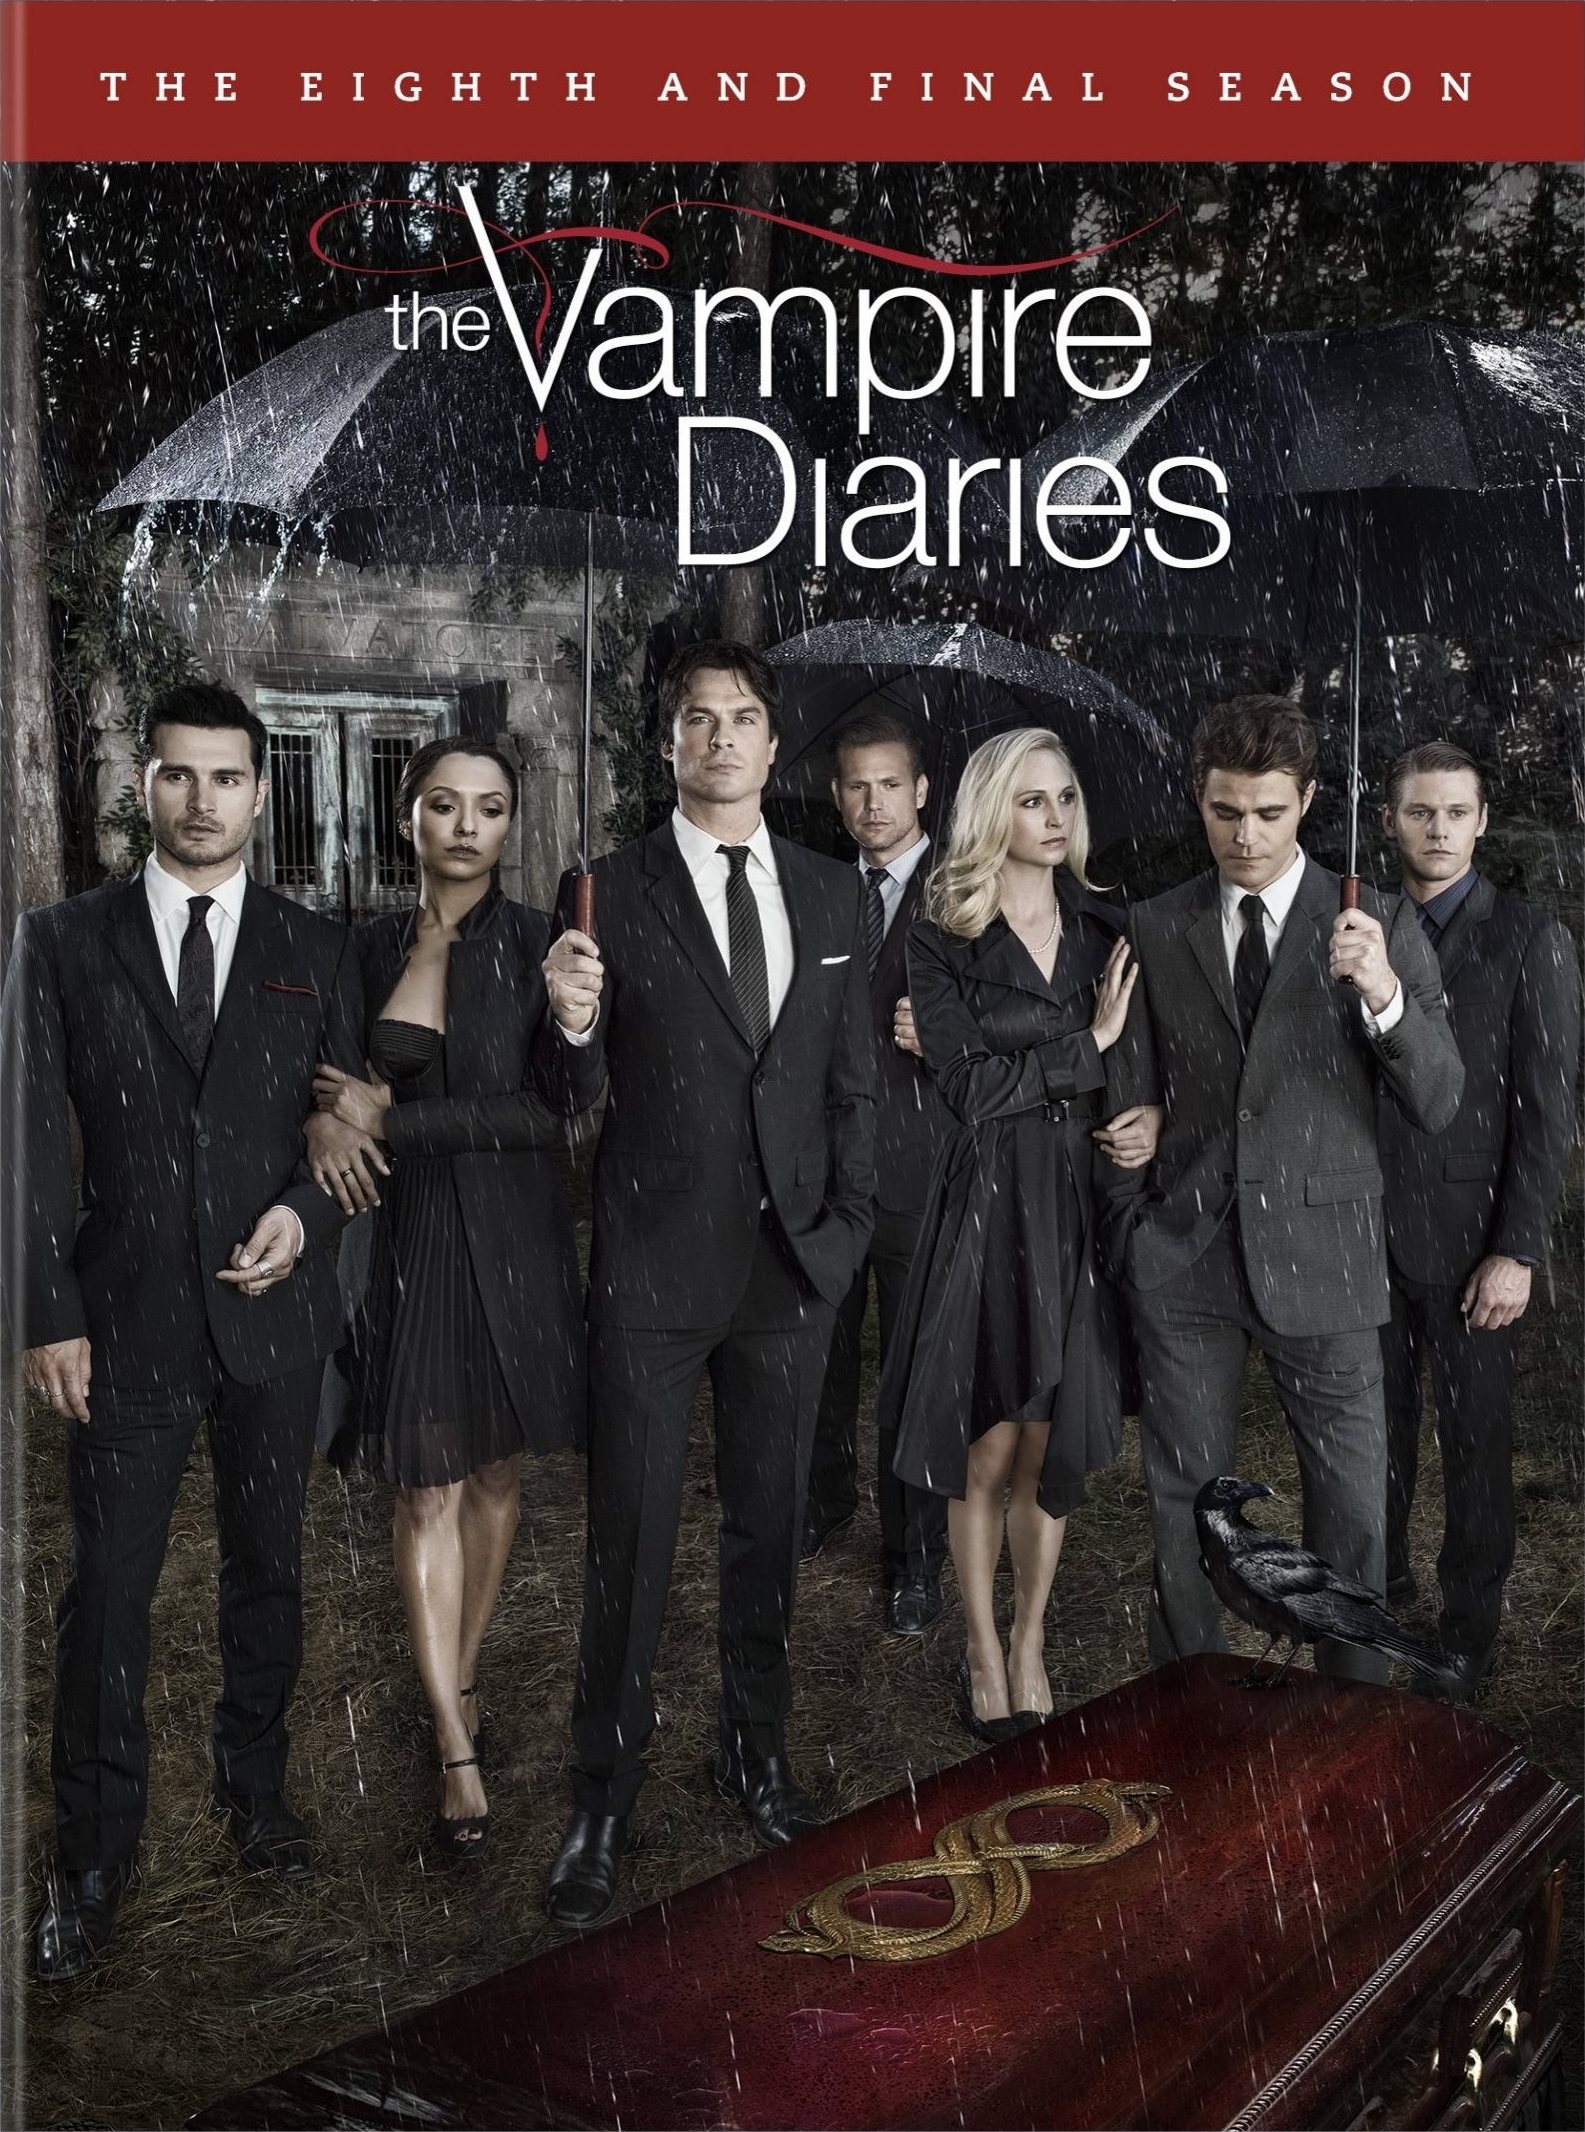 what happens in season 6 episode 20 of vampire diaries